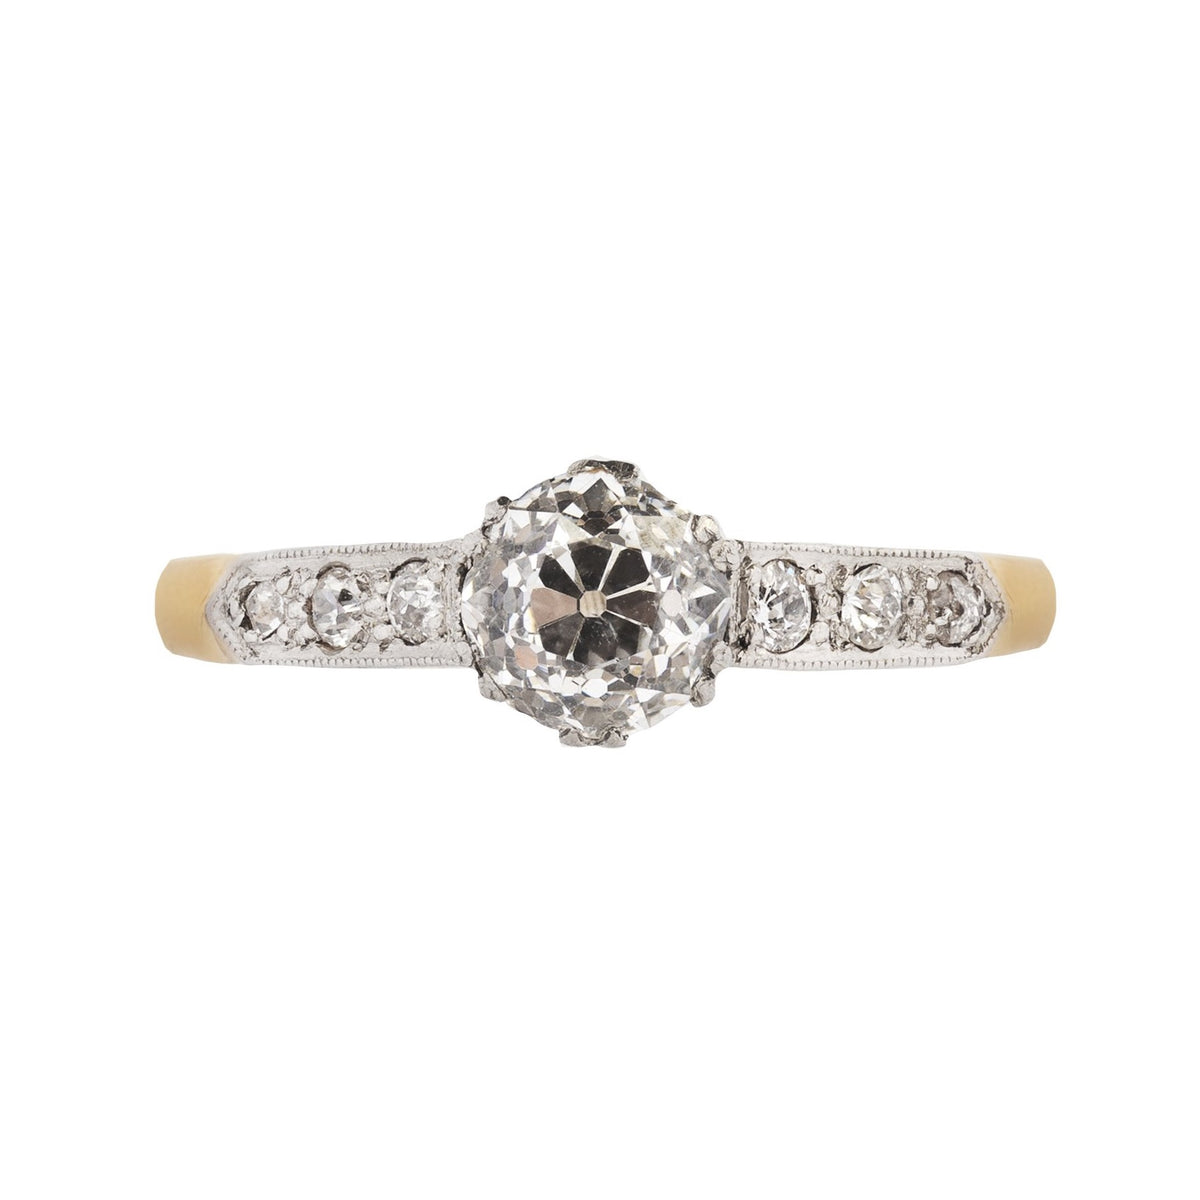 Art Deco Diamond Gold Ring